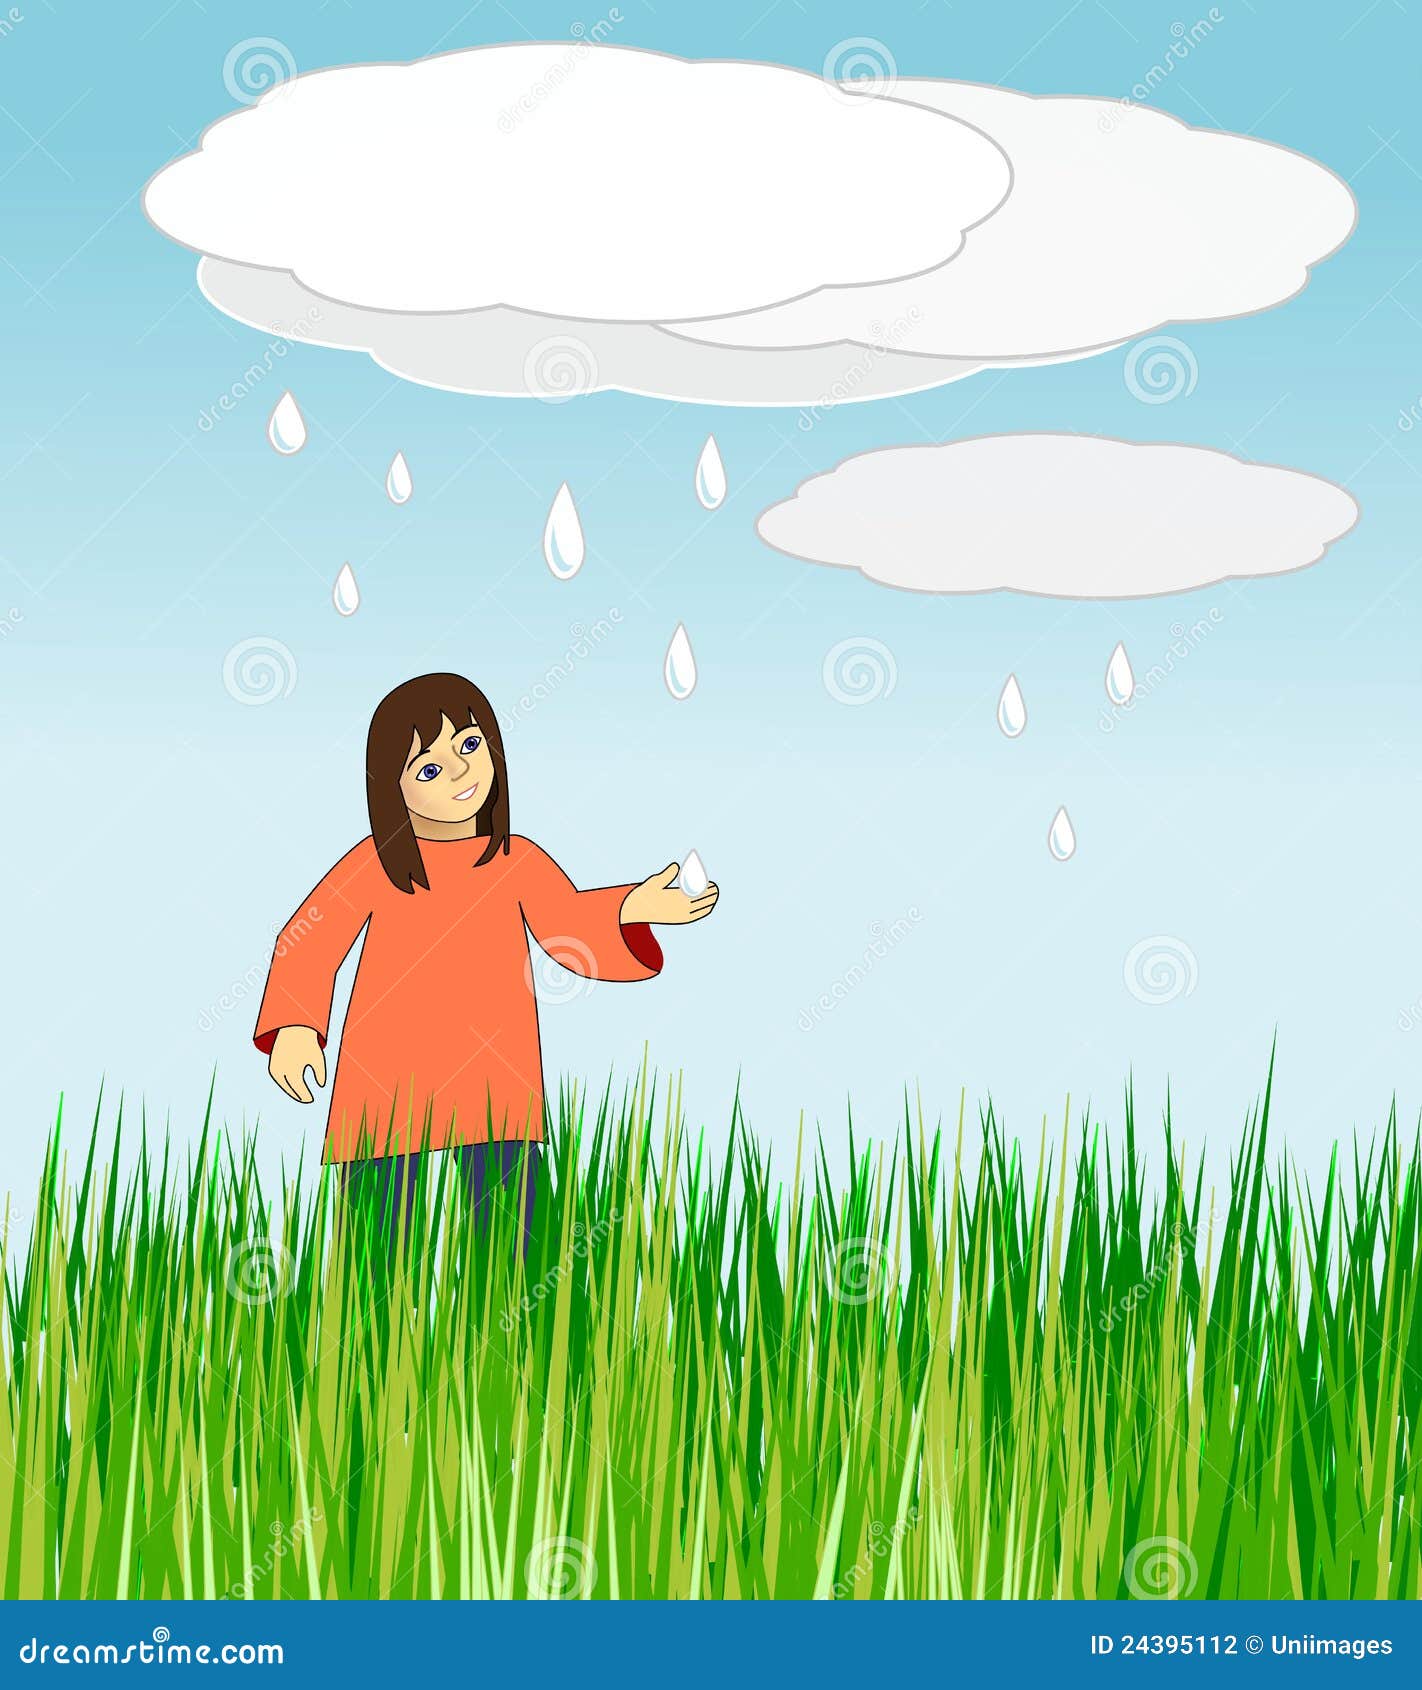 Rain Drops stock illustration. Illustration of cartoon - 24395112